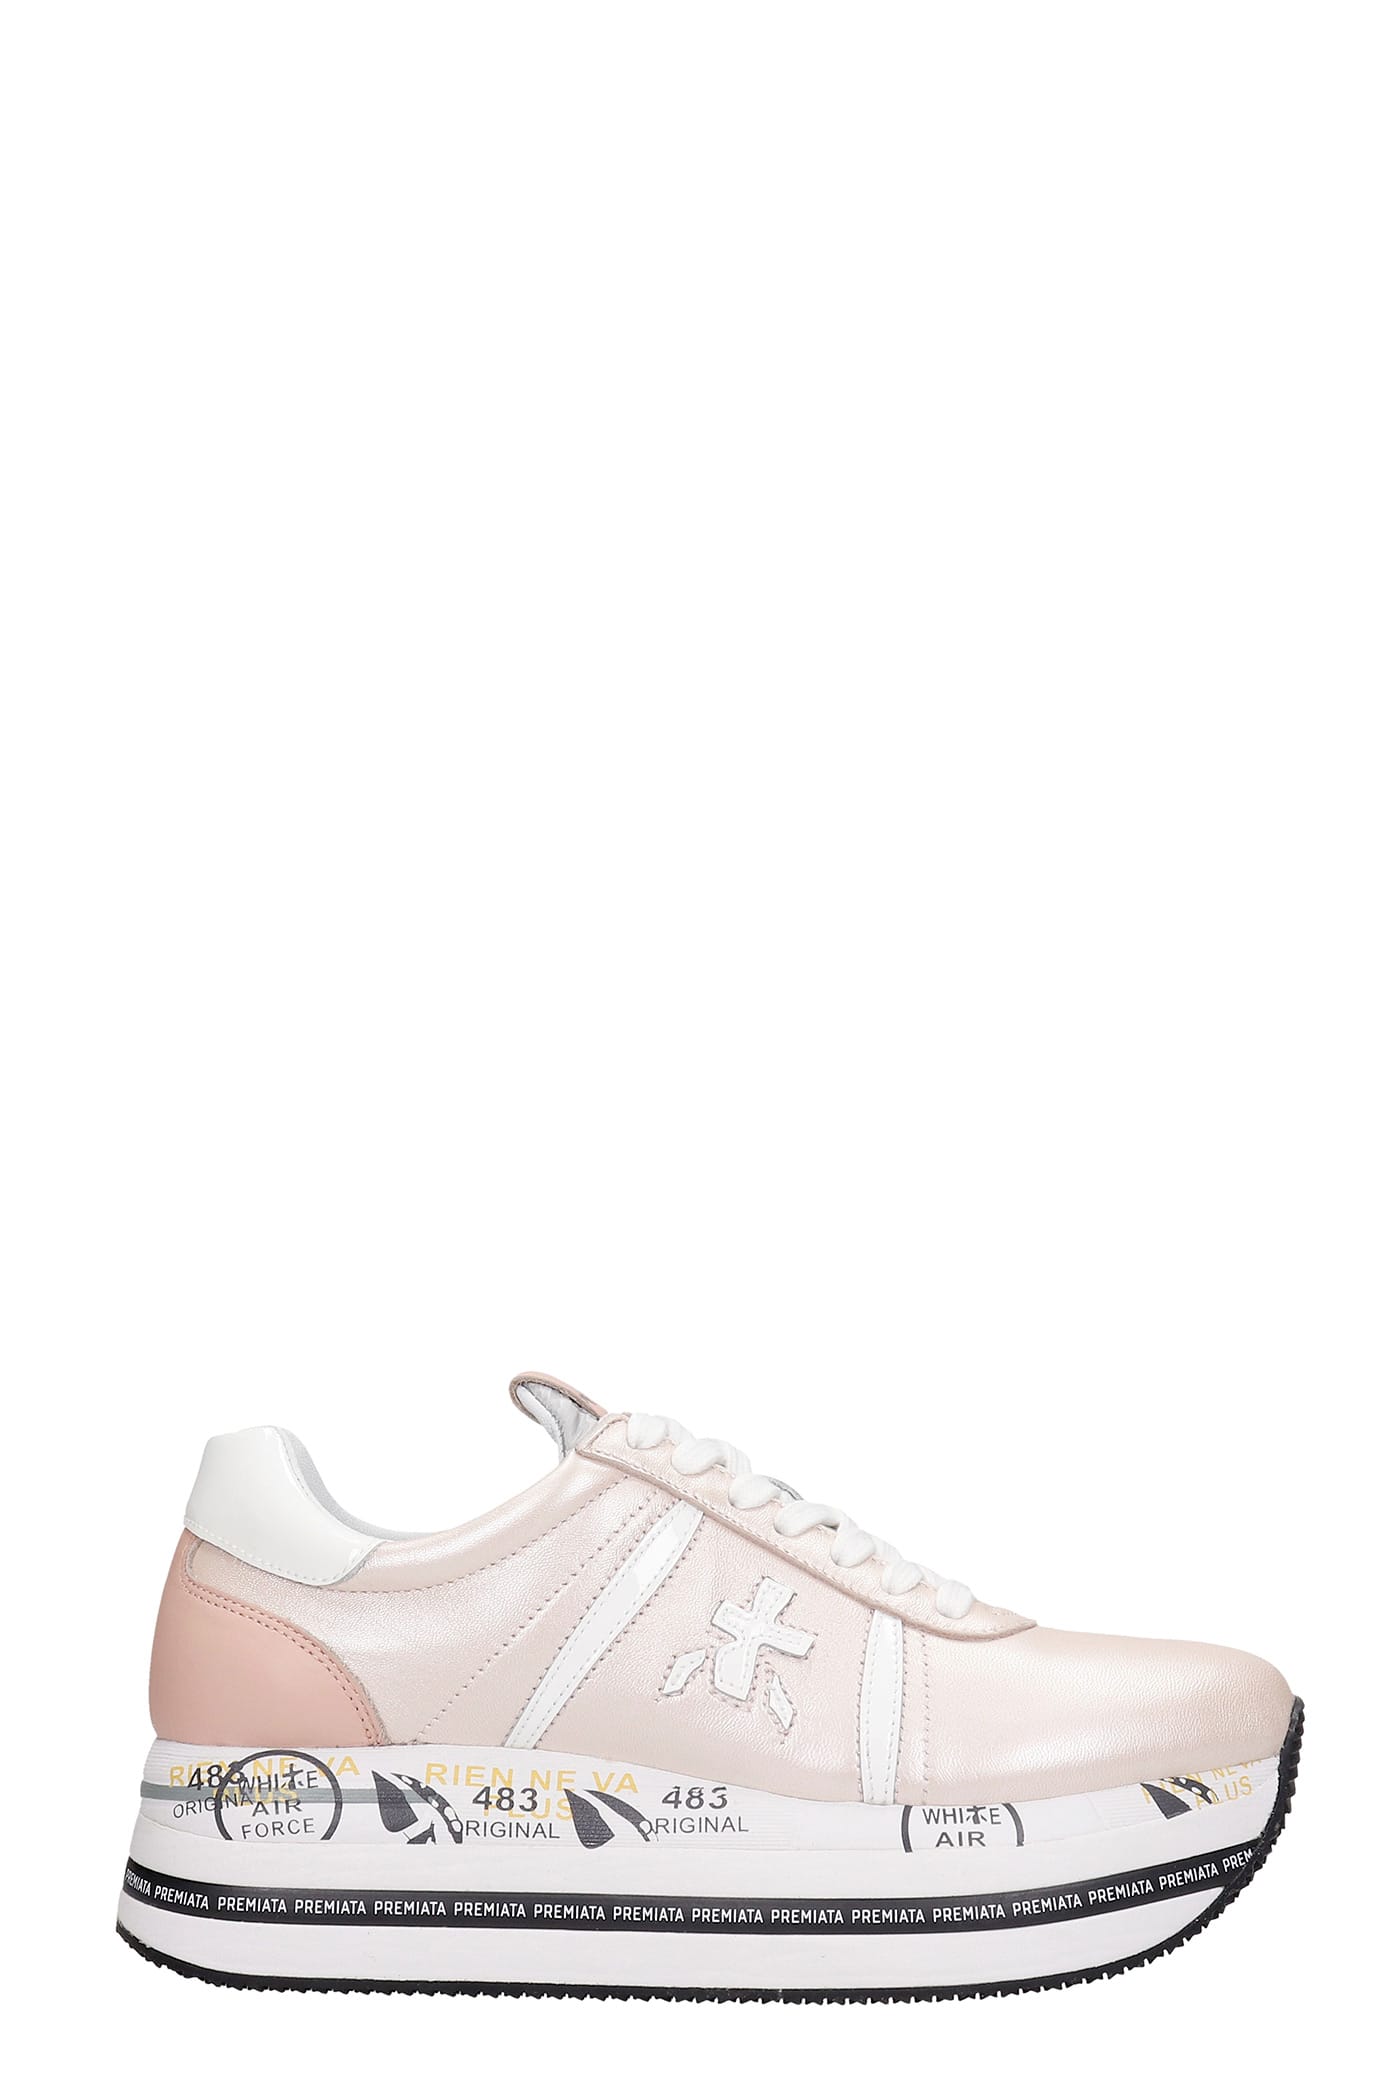 Premiata Beth Sneakers In Rose-pink Leather